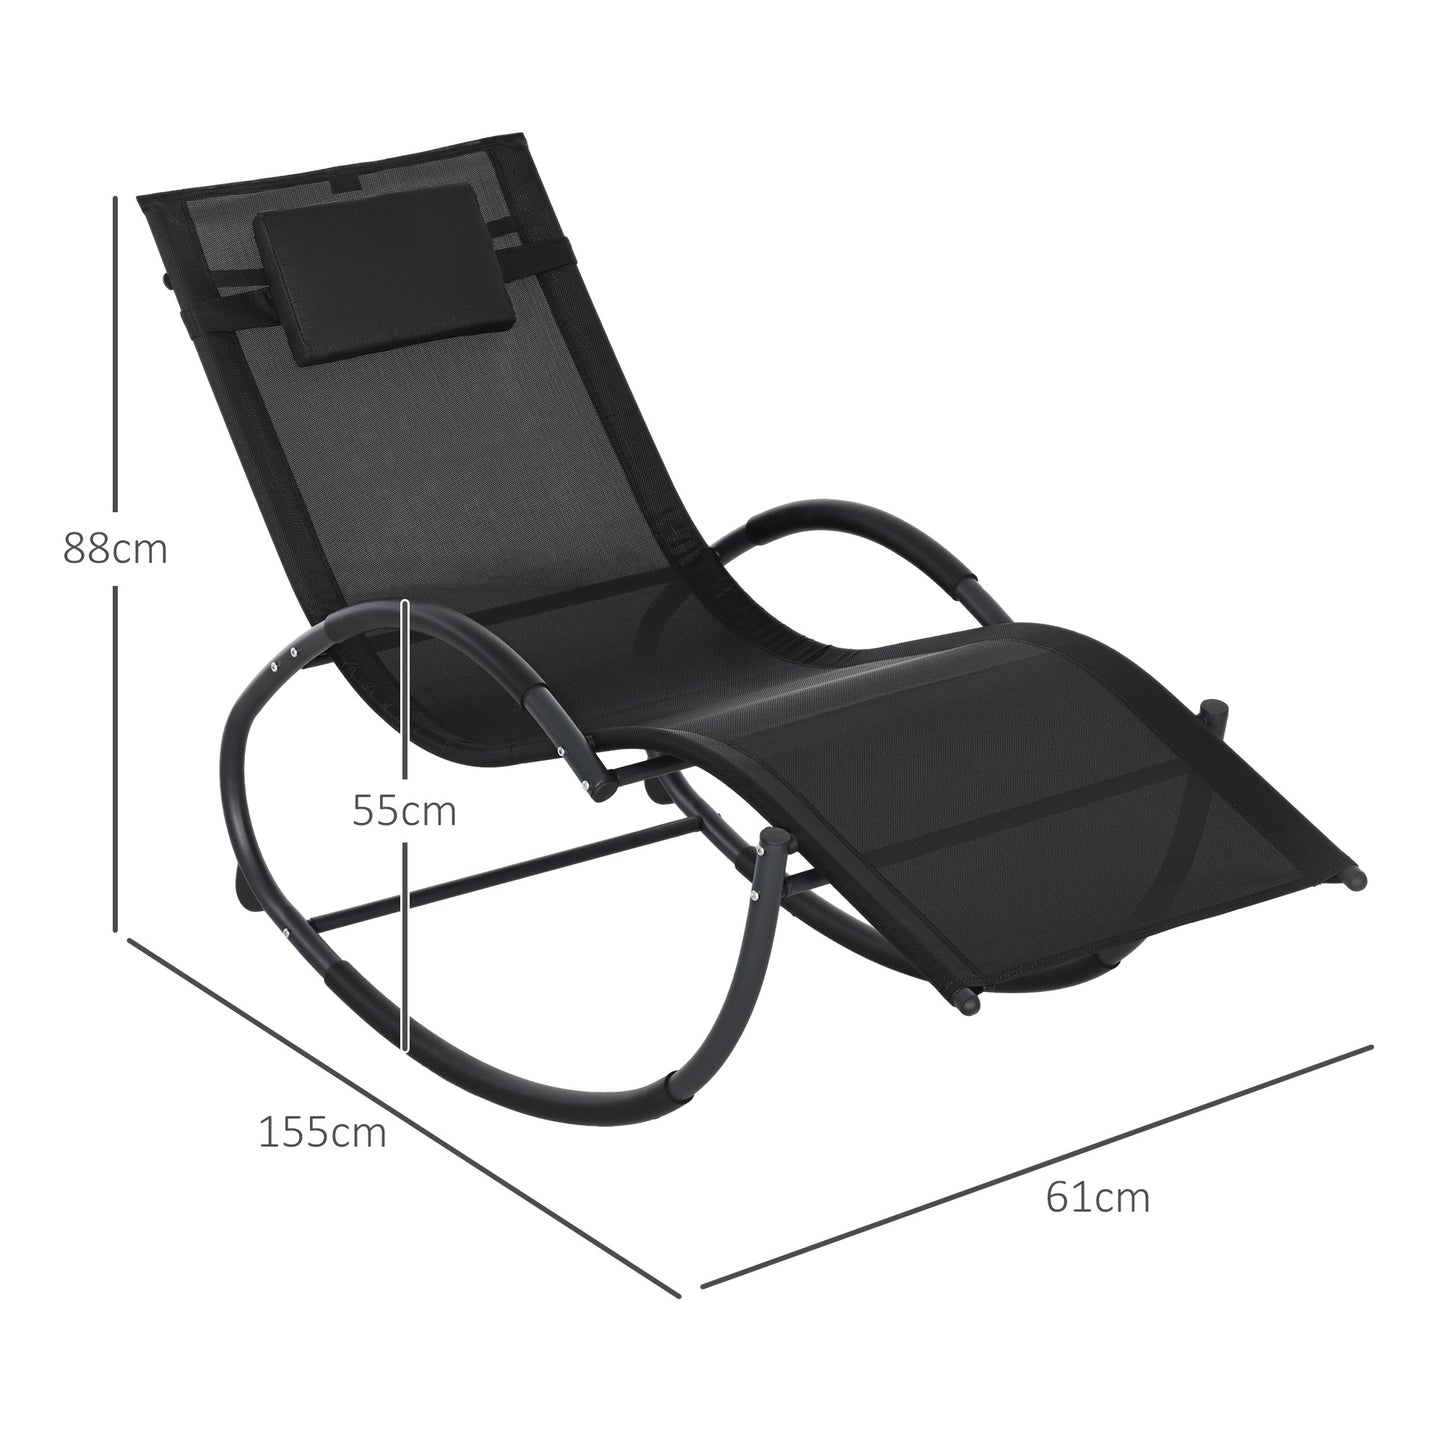 Outsunny Patio Texteline Rocking Lounge Chair Zero Gravity Rocker Outdoor Patio Garden Recliner Seat w/ Padded Pillow - Black